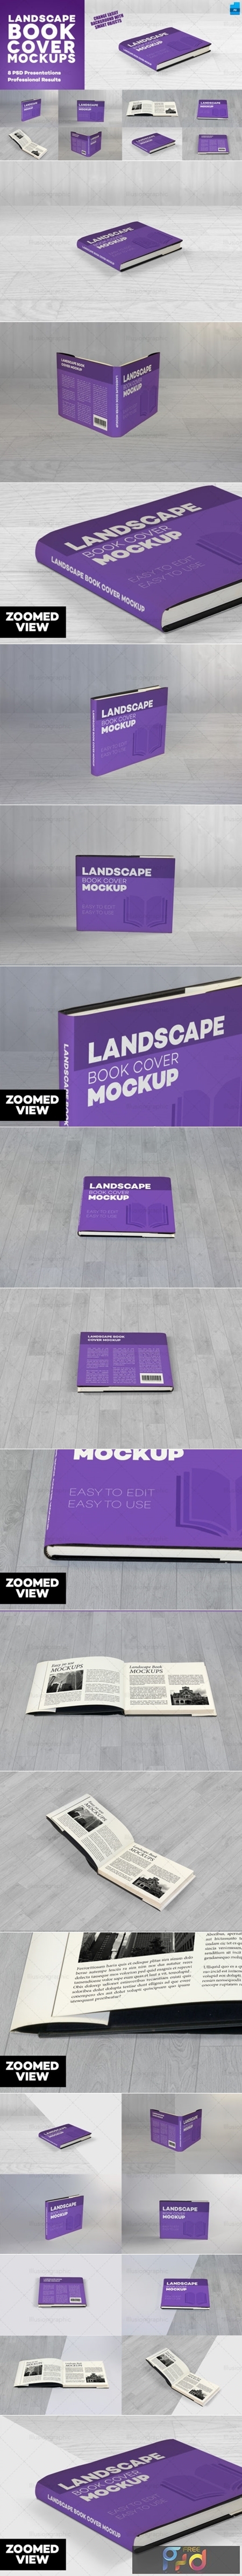 Realistic Landscape Book Cover Mockups 3684664 1